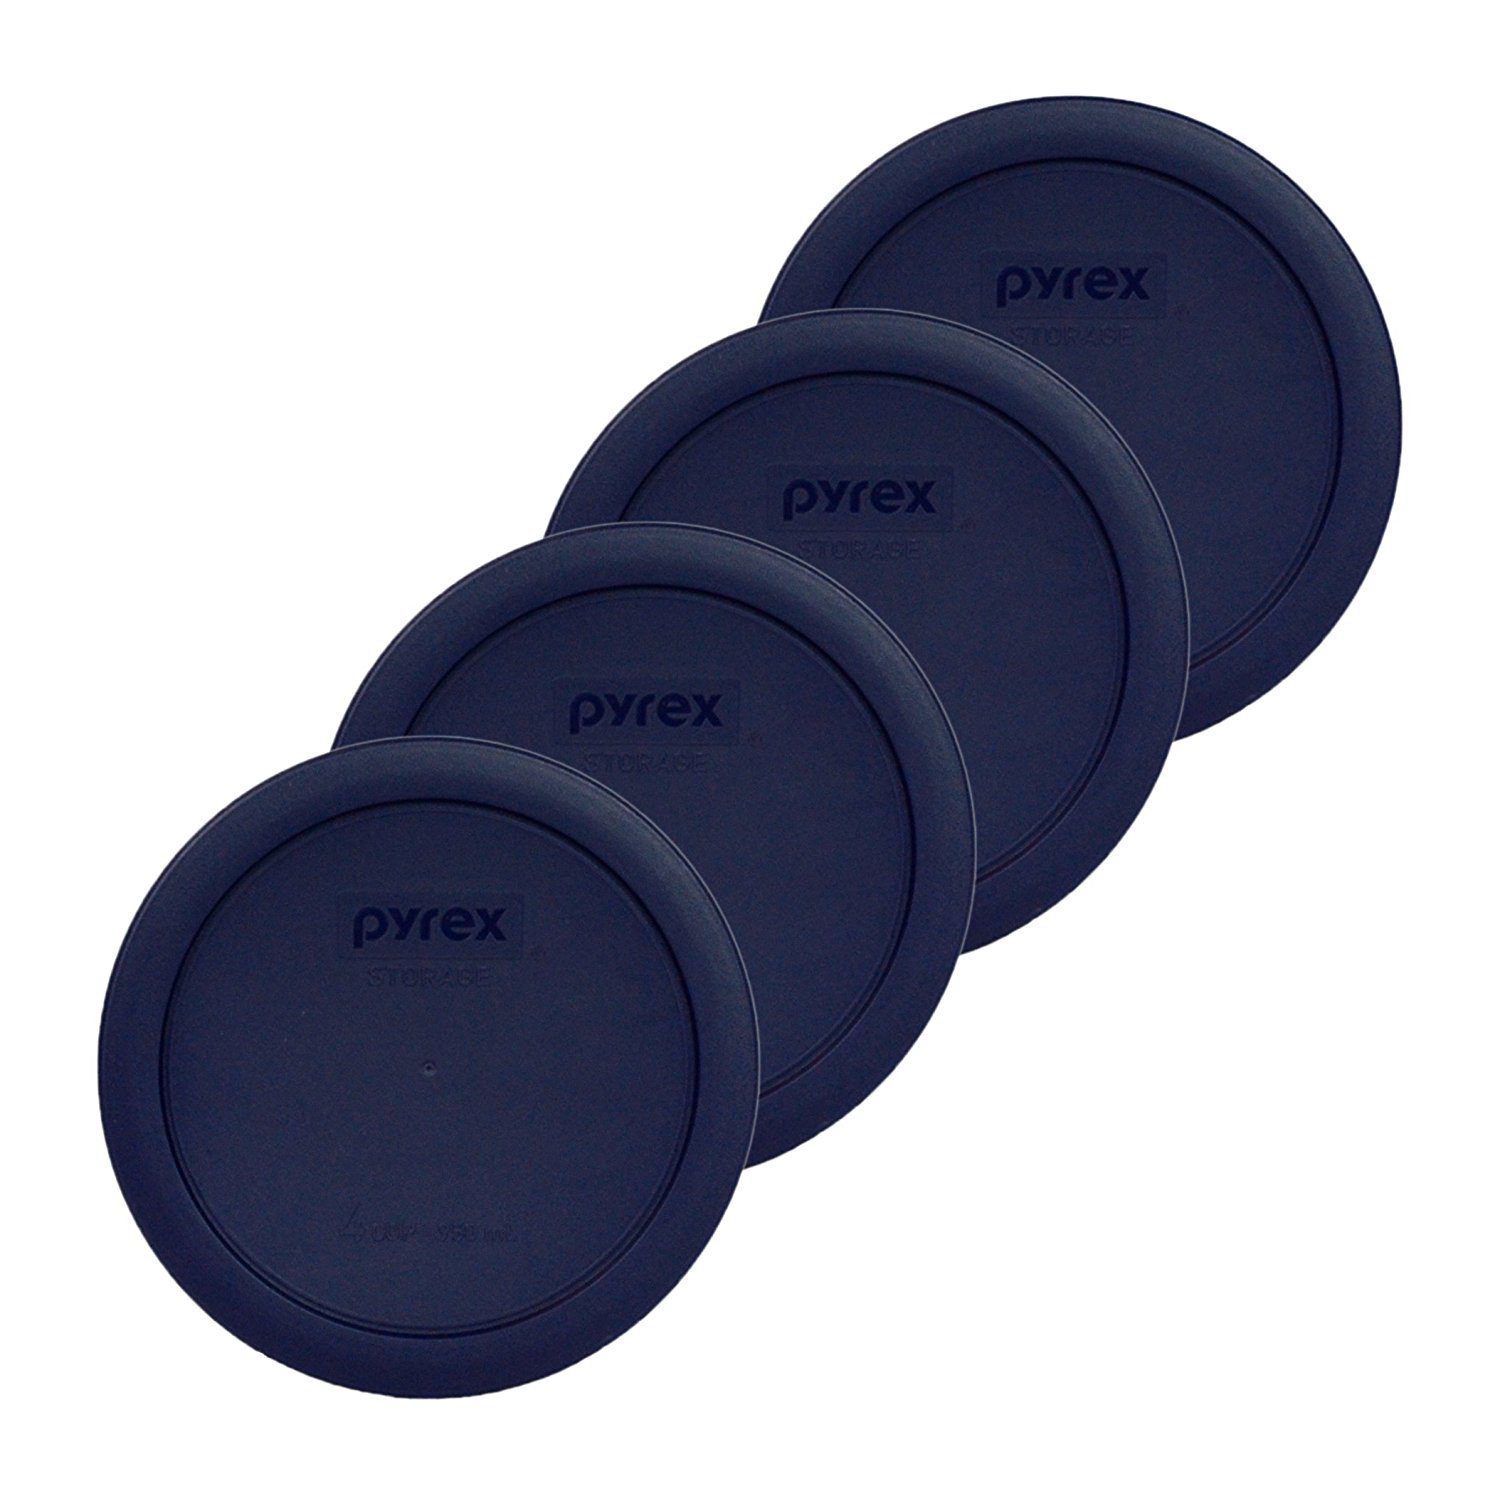 Pyrex replacement lids sfdguhyuyerv